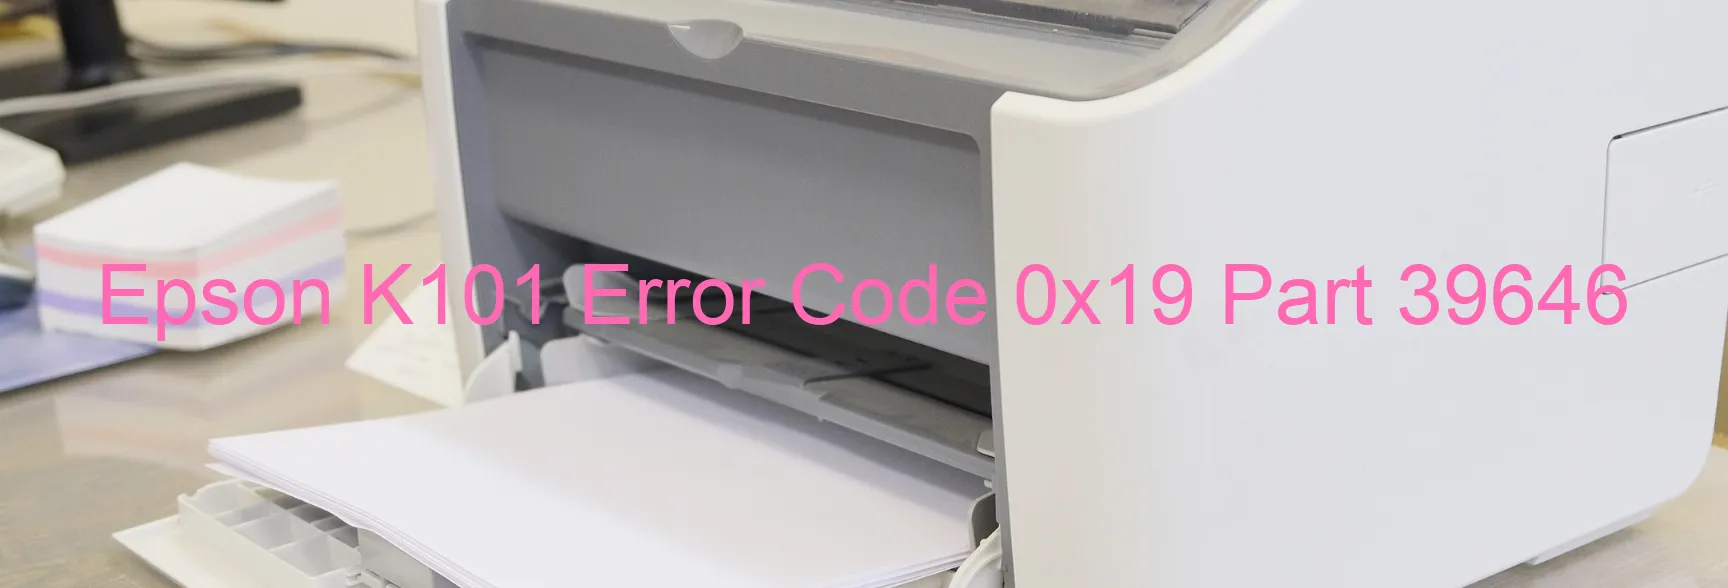 Epson K101 Error 0x19